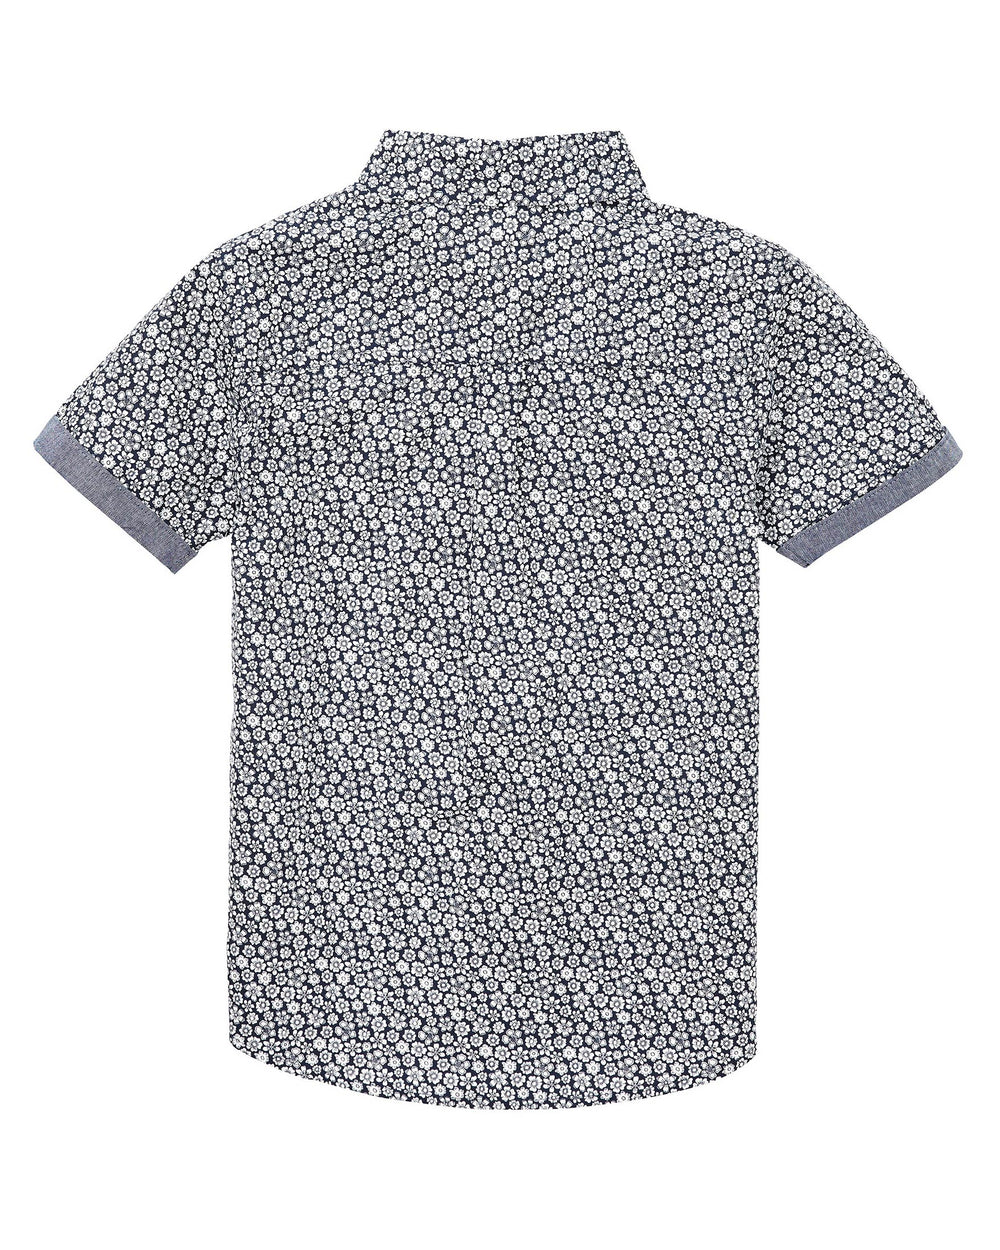 Boys' Navy/White Short-Sleeve Button-Down Shirt (Sizes 4-7)